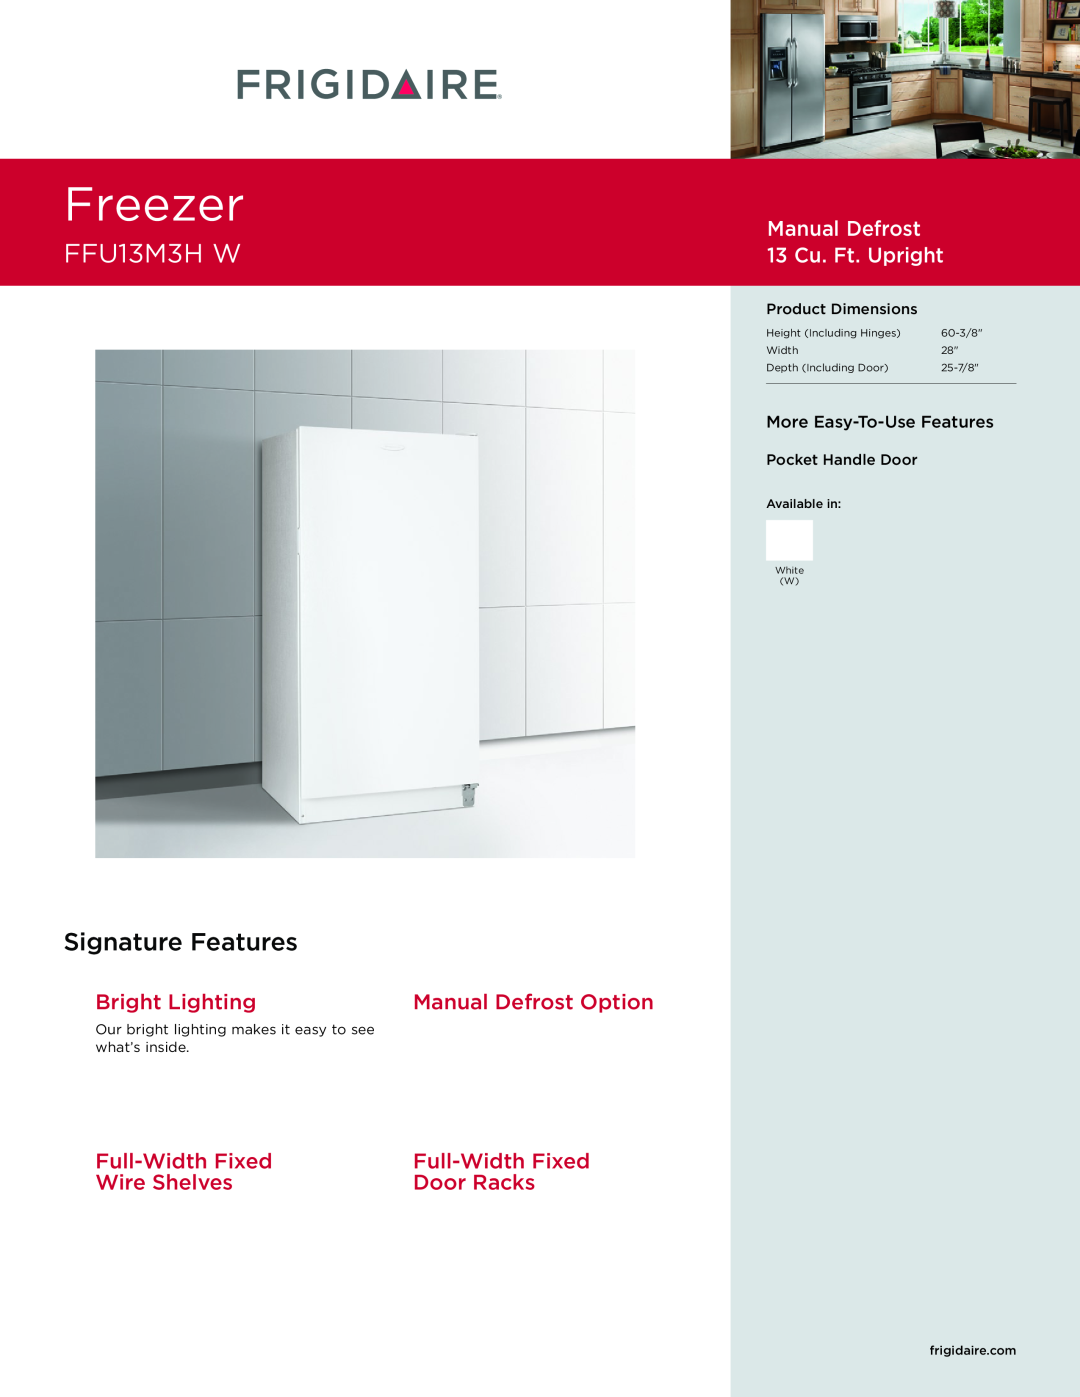 Frigidaire FFU13M3H W dimensions Freezer, Signature Features, Bright Lighting, Manual Defrost Option, Full-WidthFixed 